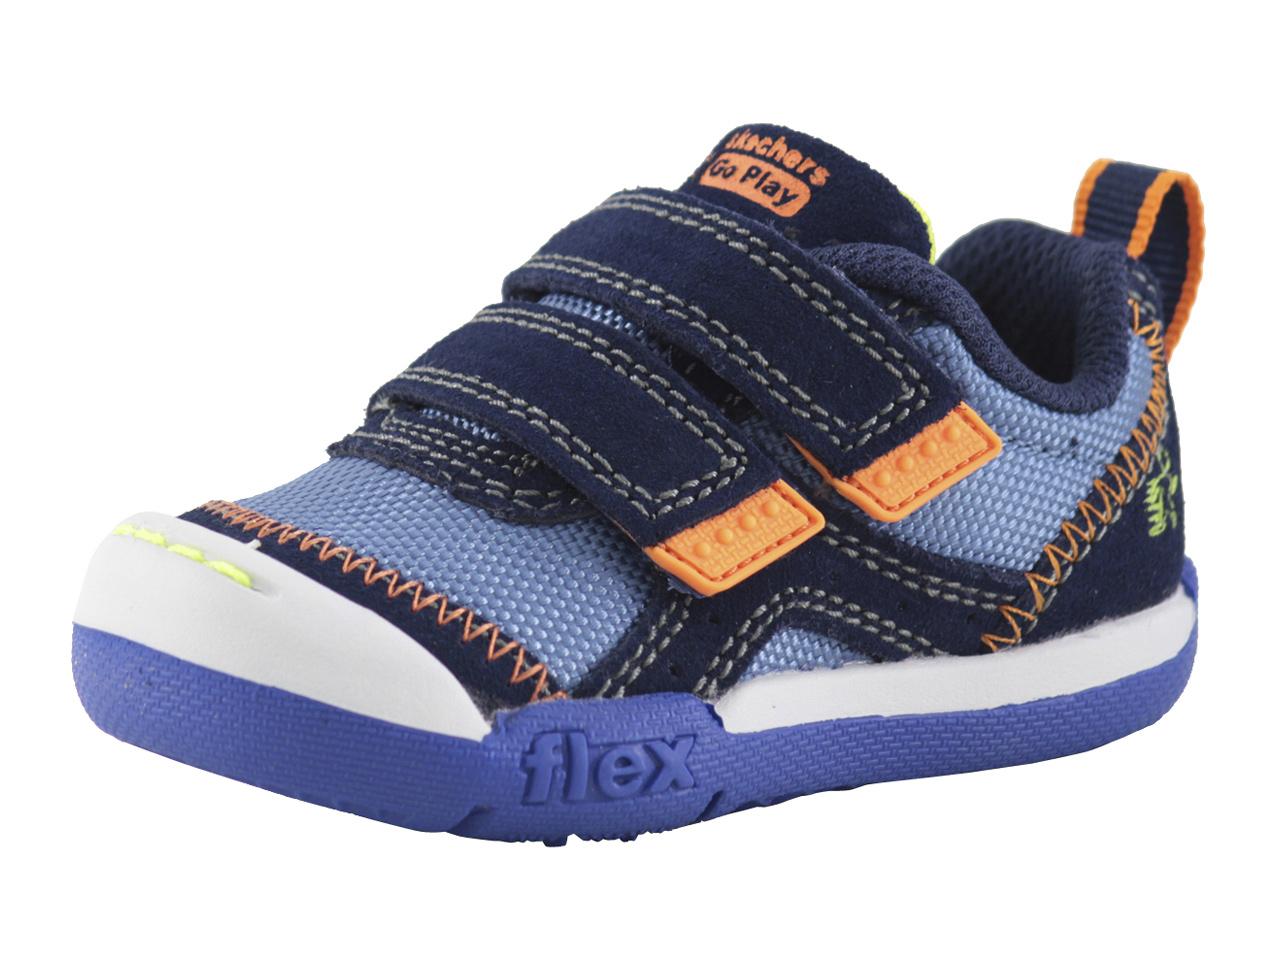 Flex Play Double Duty Sneakers Shoes